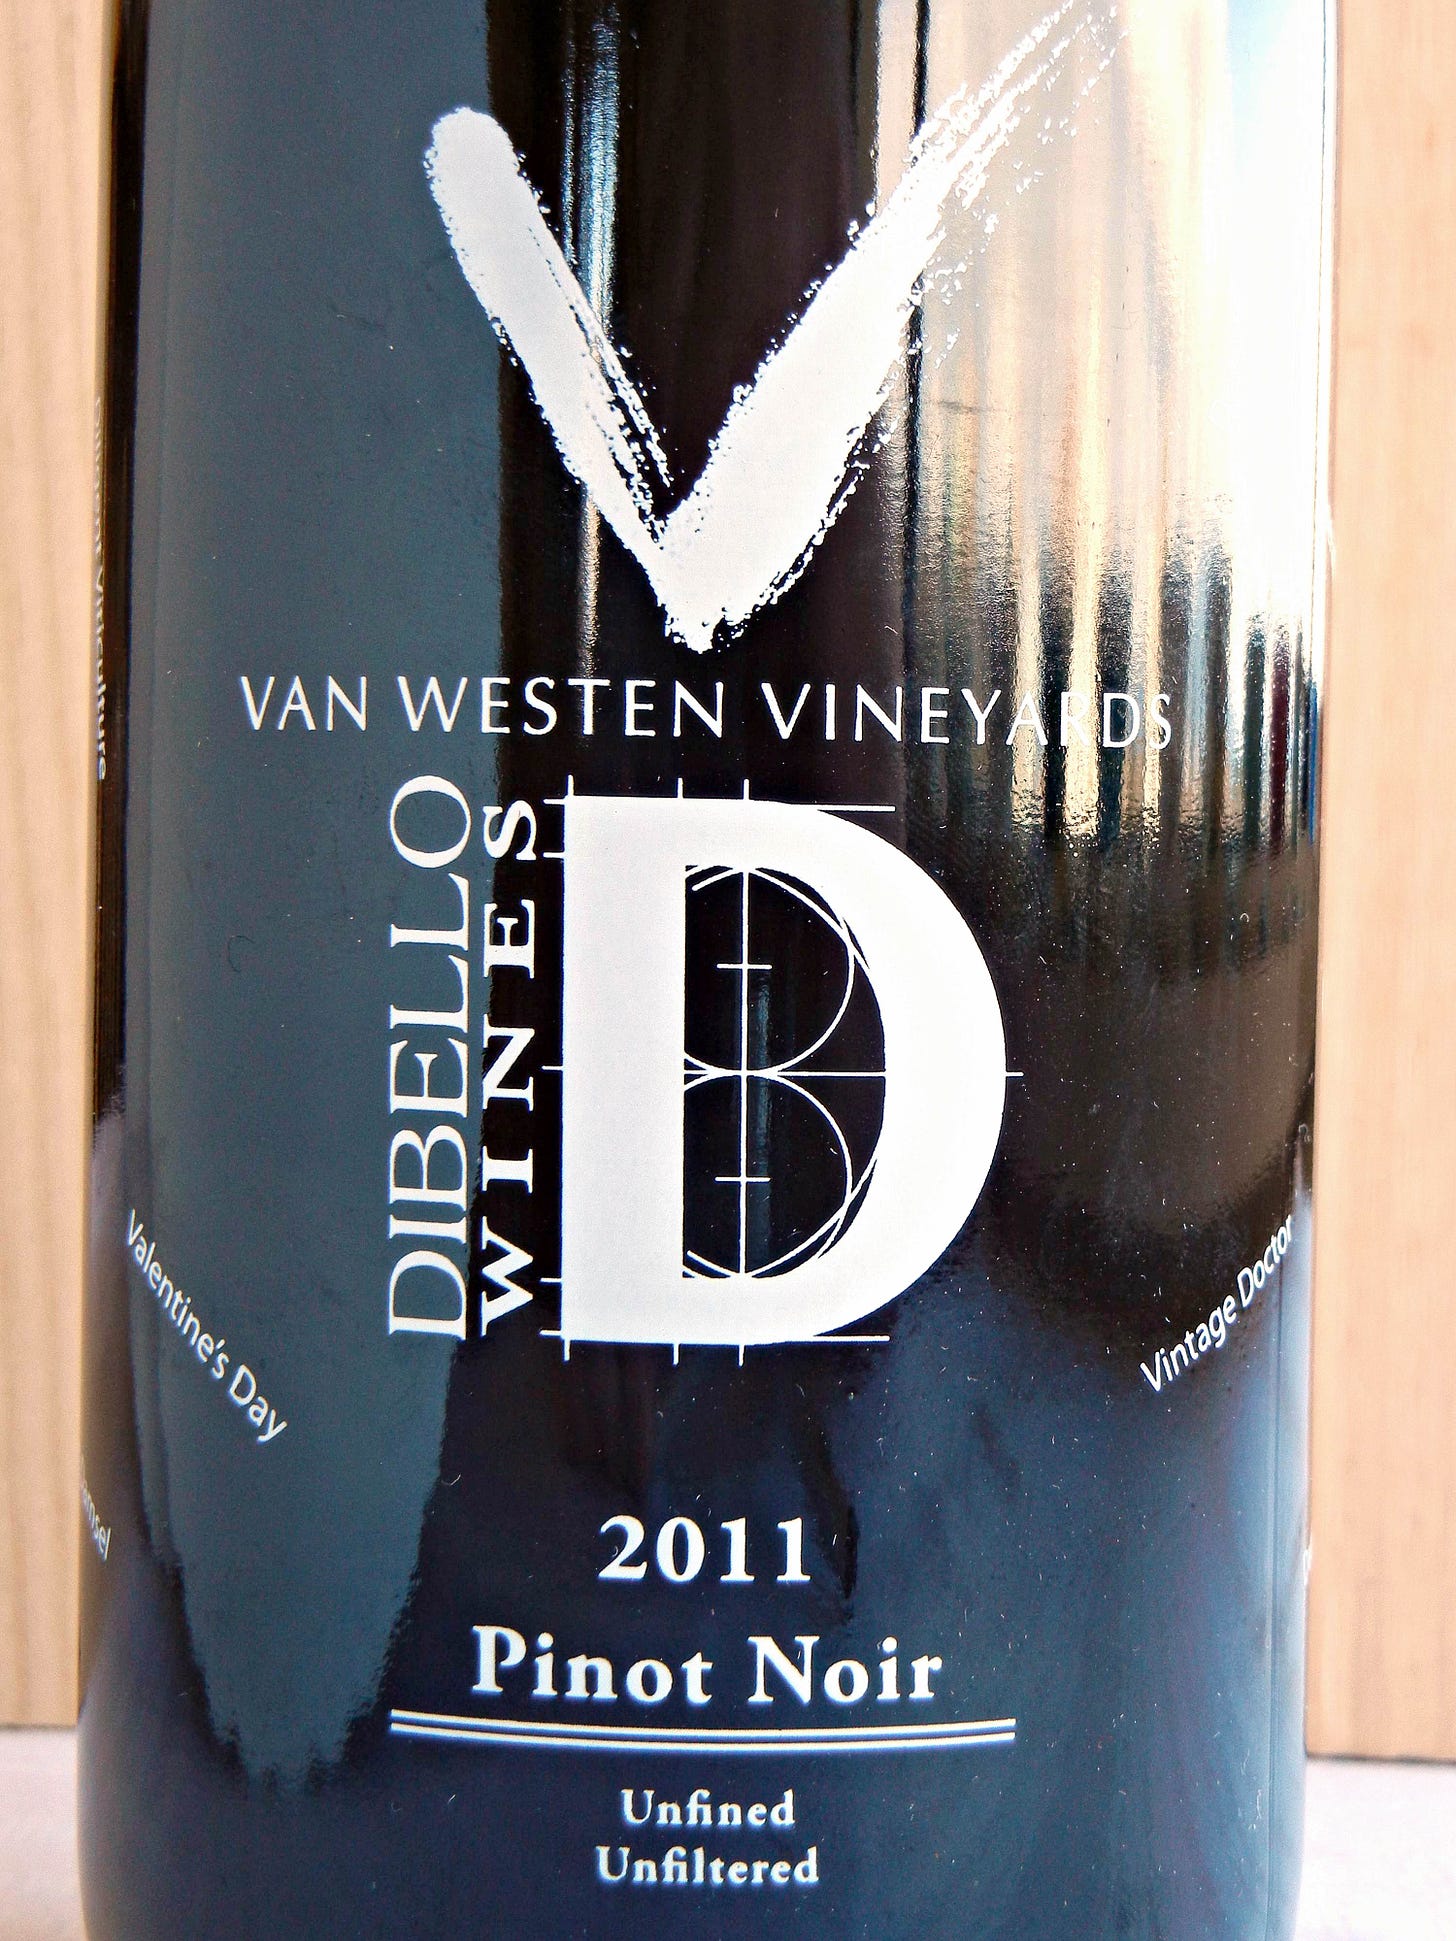 Van Westen VD Pinot Noir 2011 Label - BC Pinot Noir Tasting Review 11